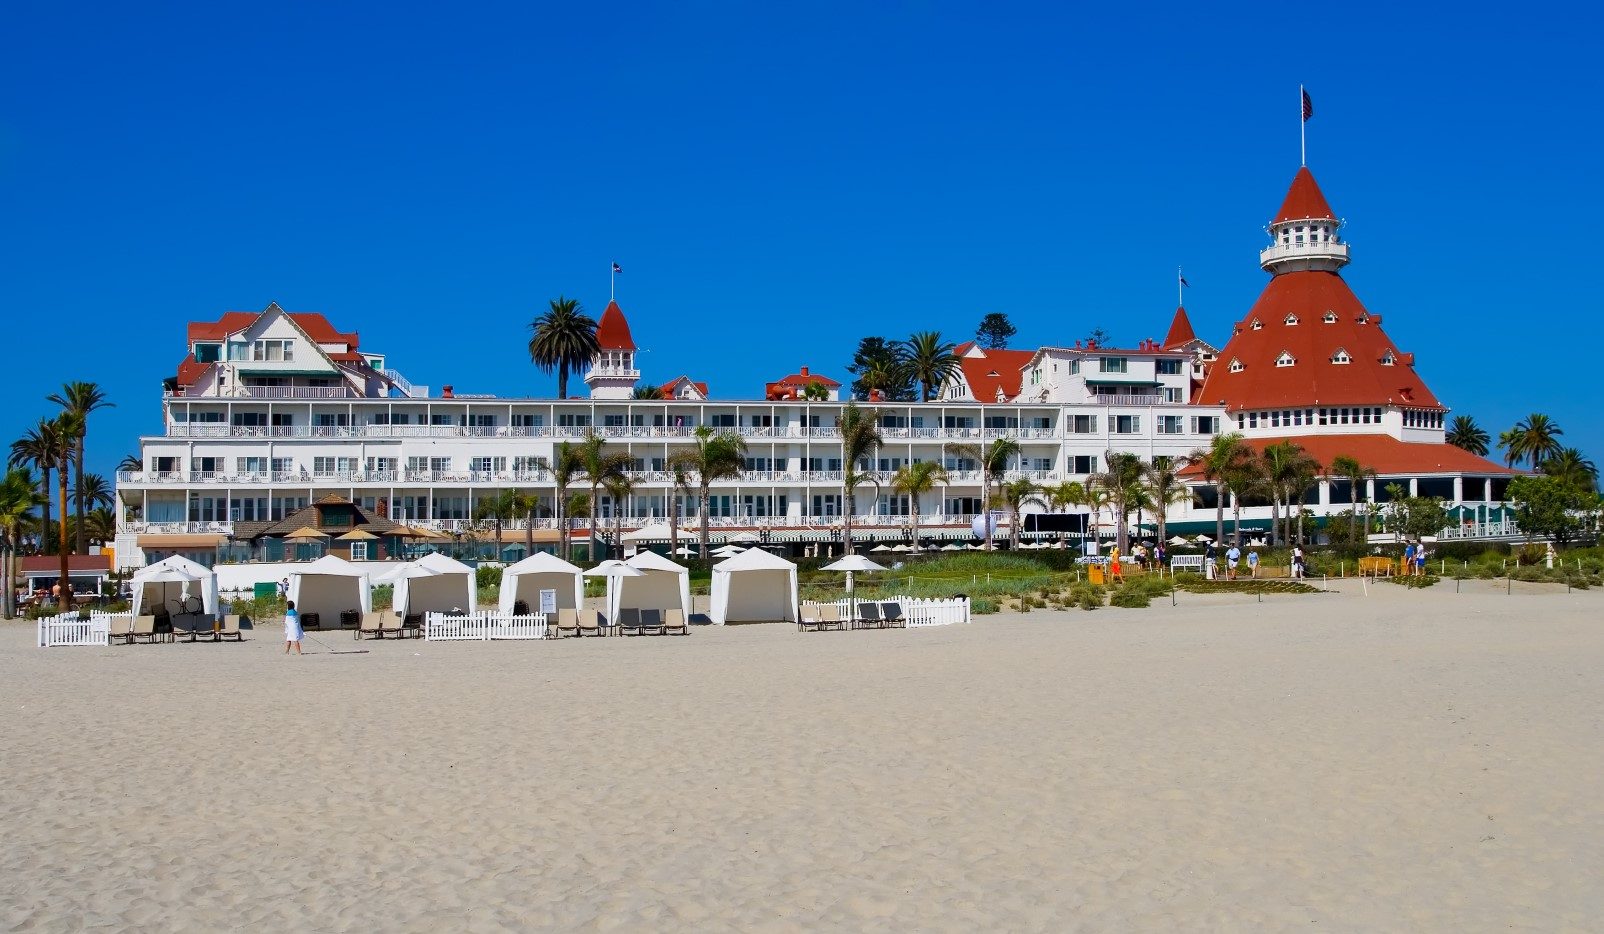 Hotel del Coronado, Coronado, CA - California Beaches